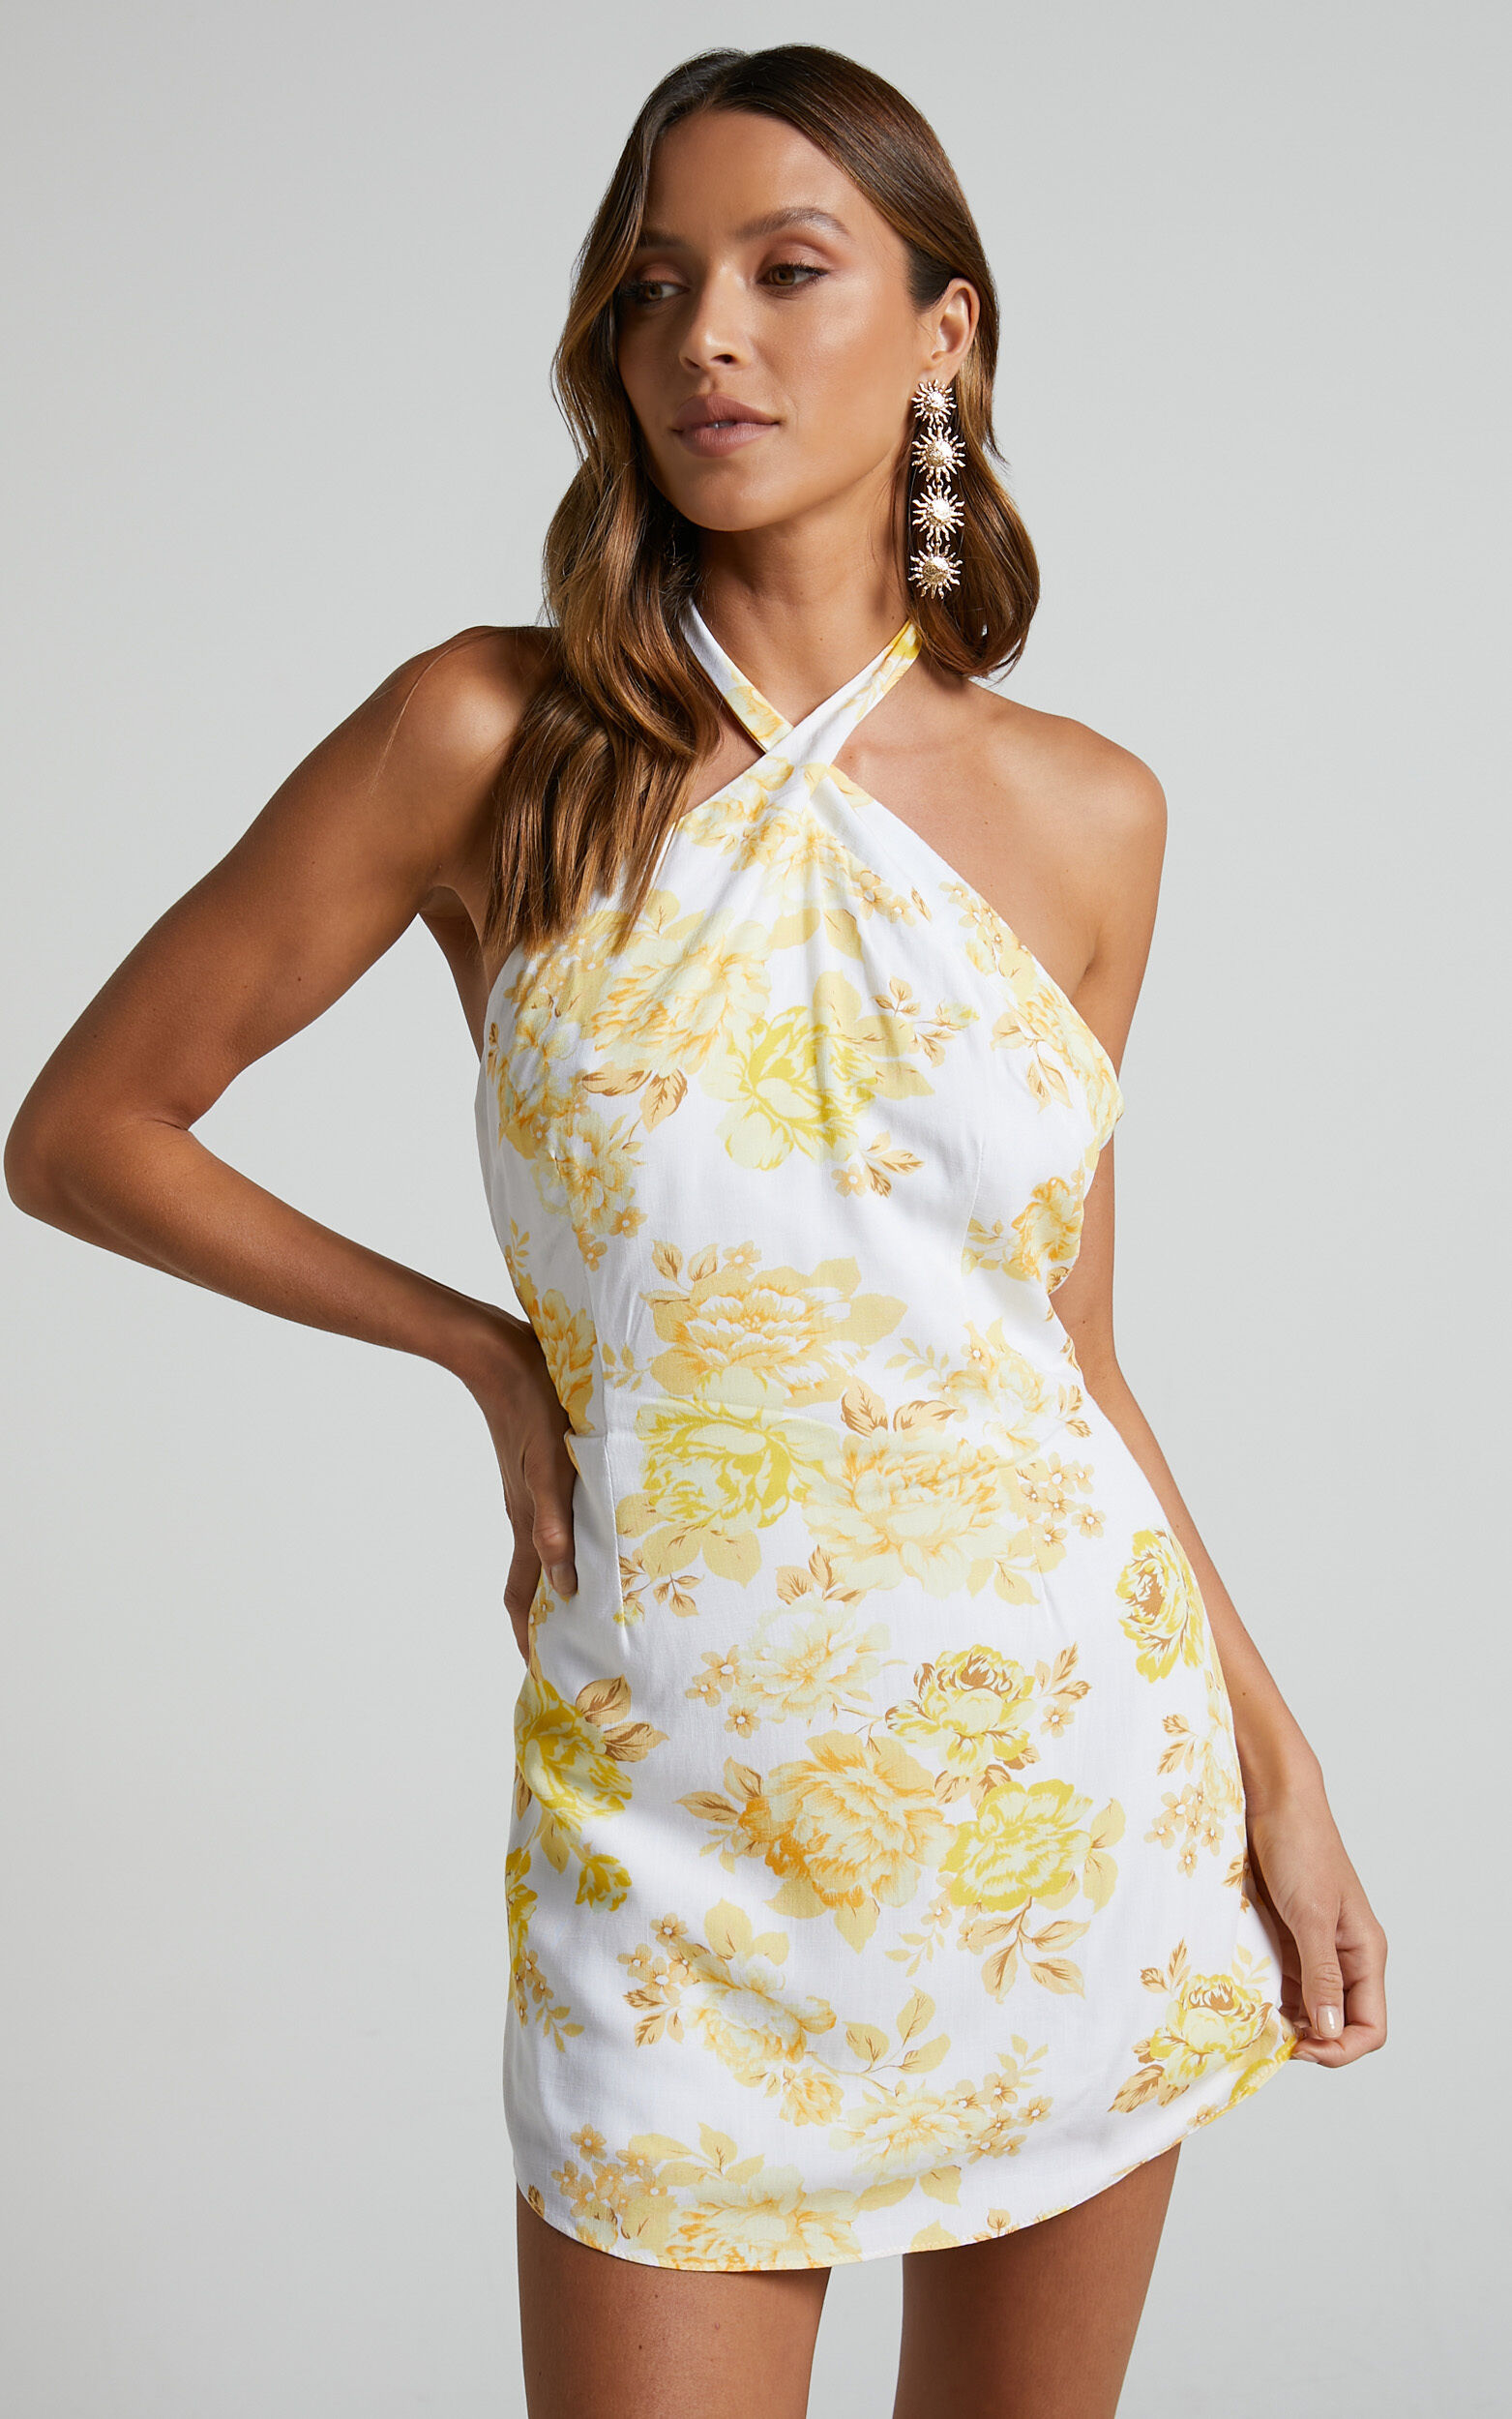 Faran Mini Dress - Crossover Halter Backless Dress in Yellow Floral - 06, YEL1